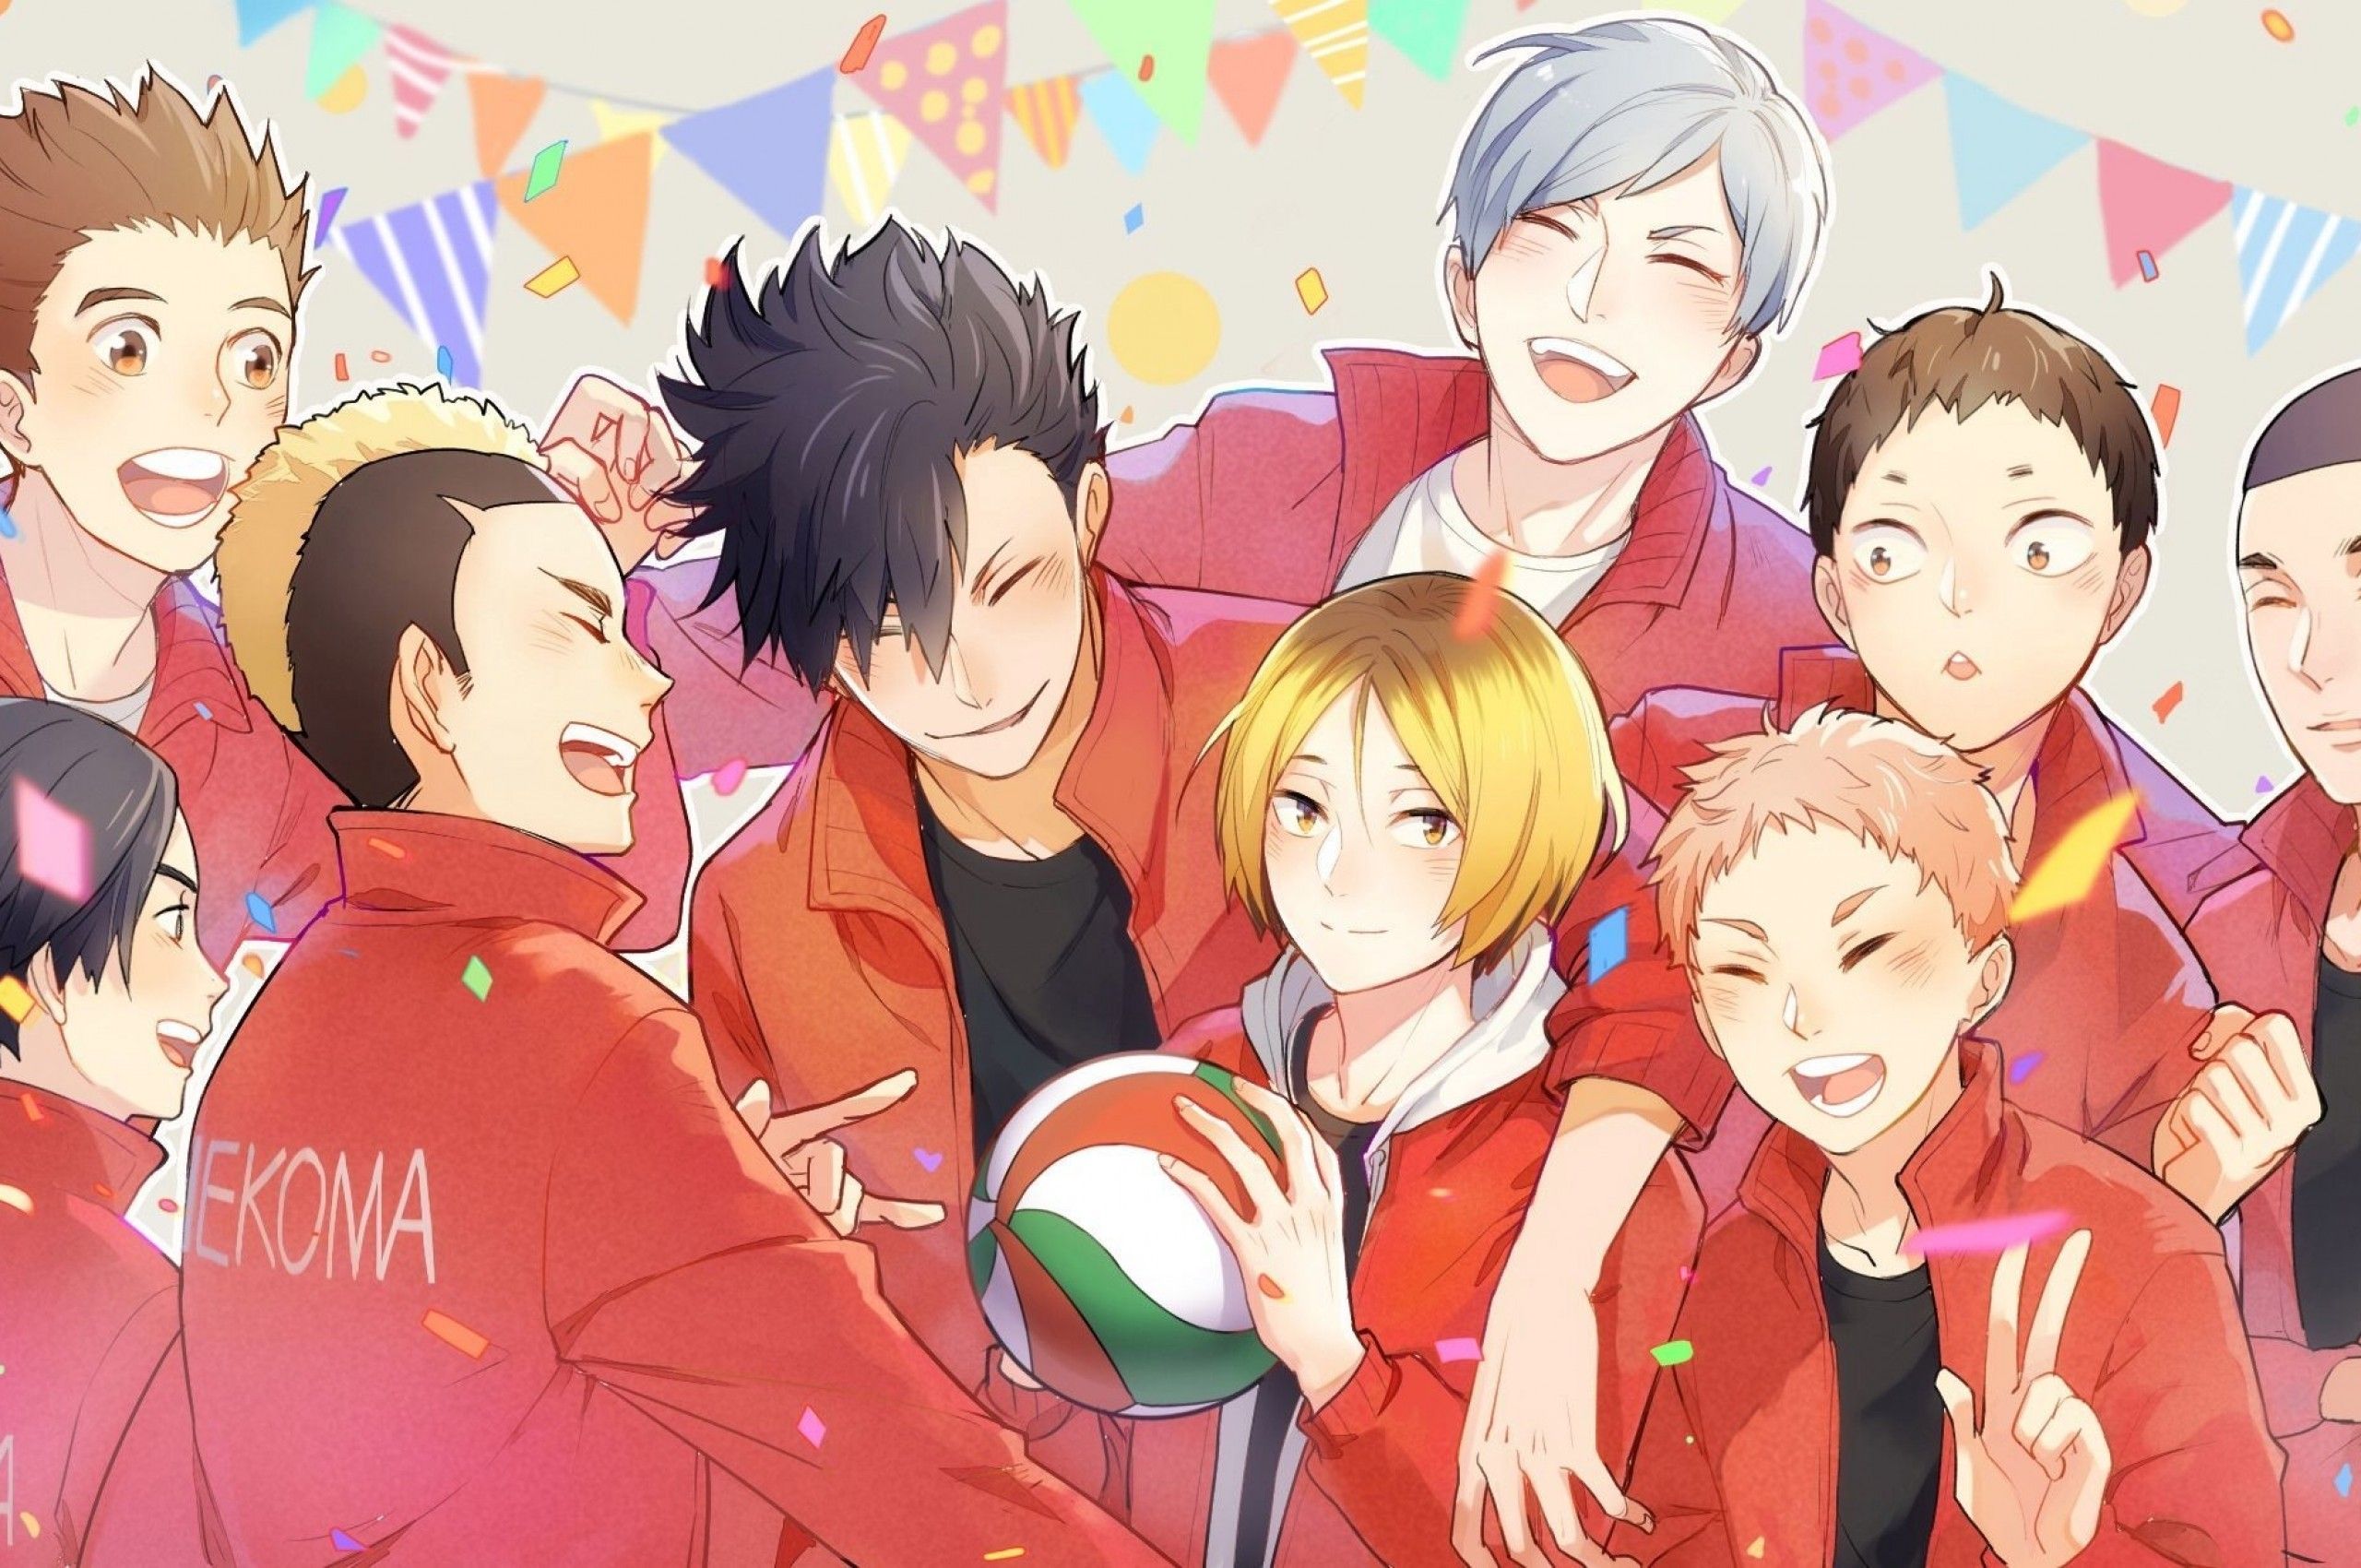 Download 2560x1700 Haikyu!!, Team, Volleyball Anime, Friendship Wallpaper for Chromebook Pixel